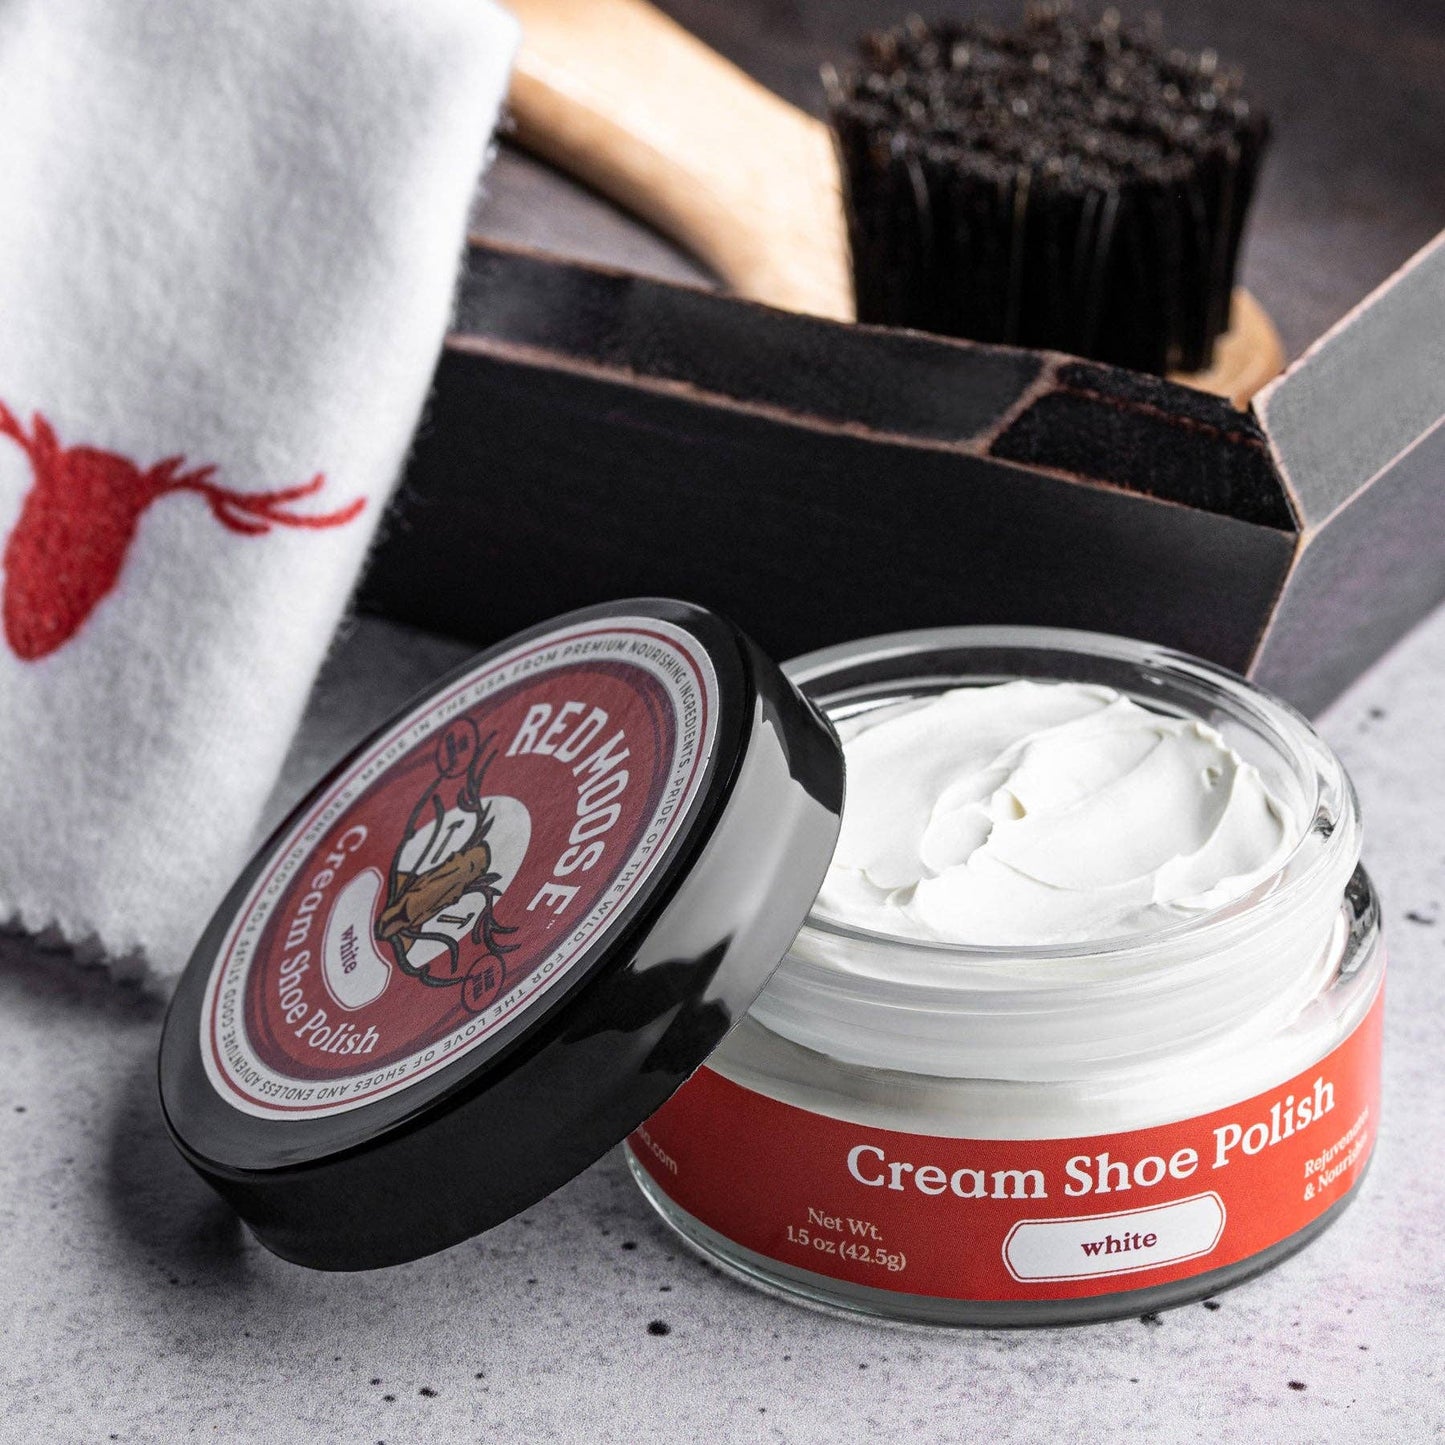 Cream Shoe Polish: Black